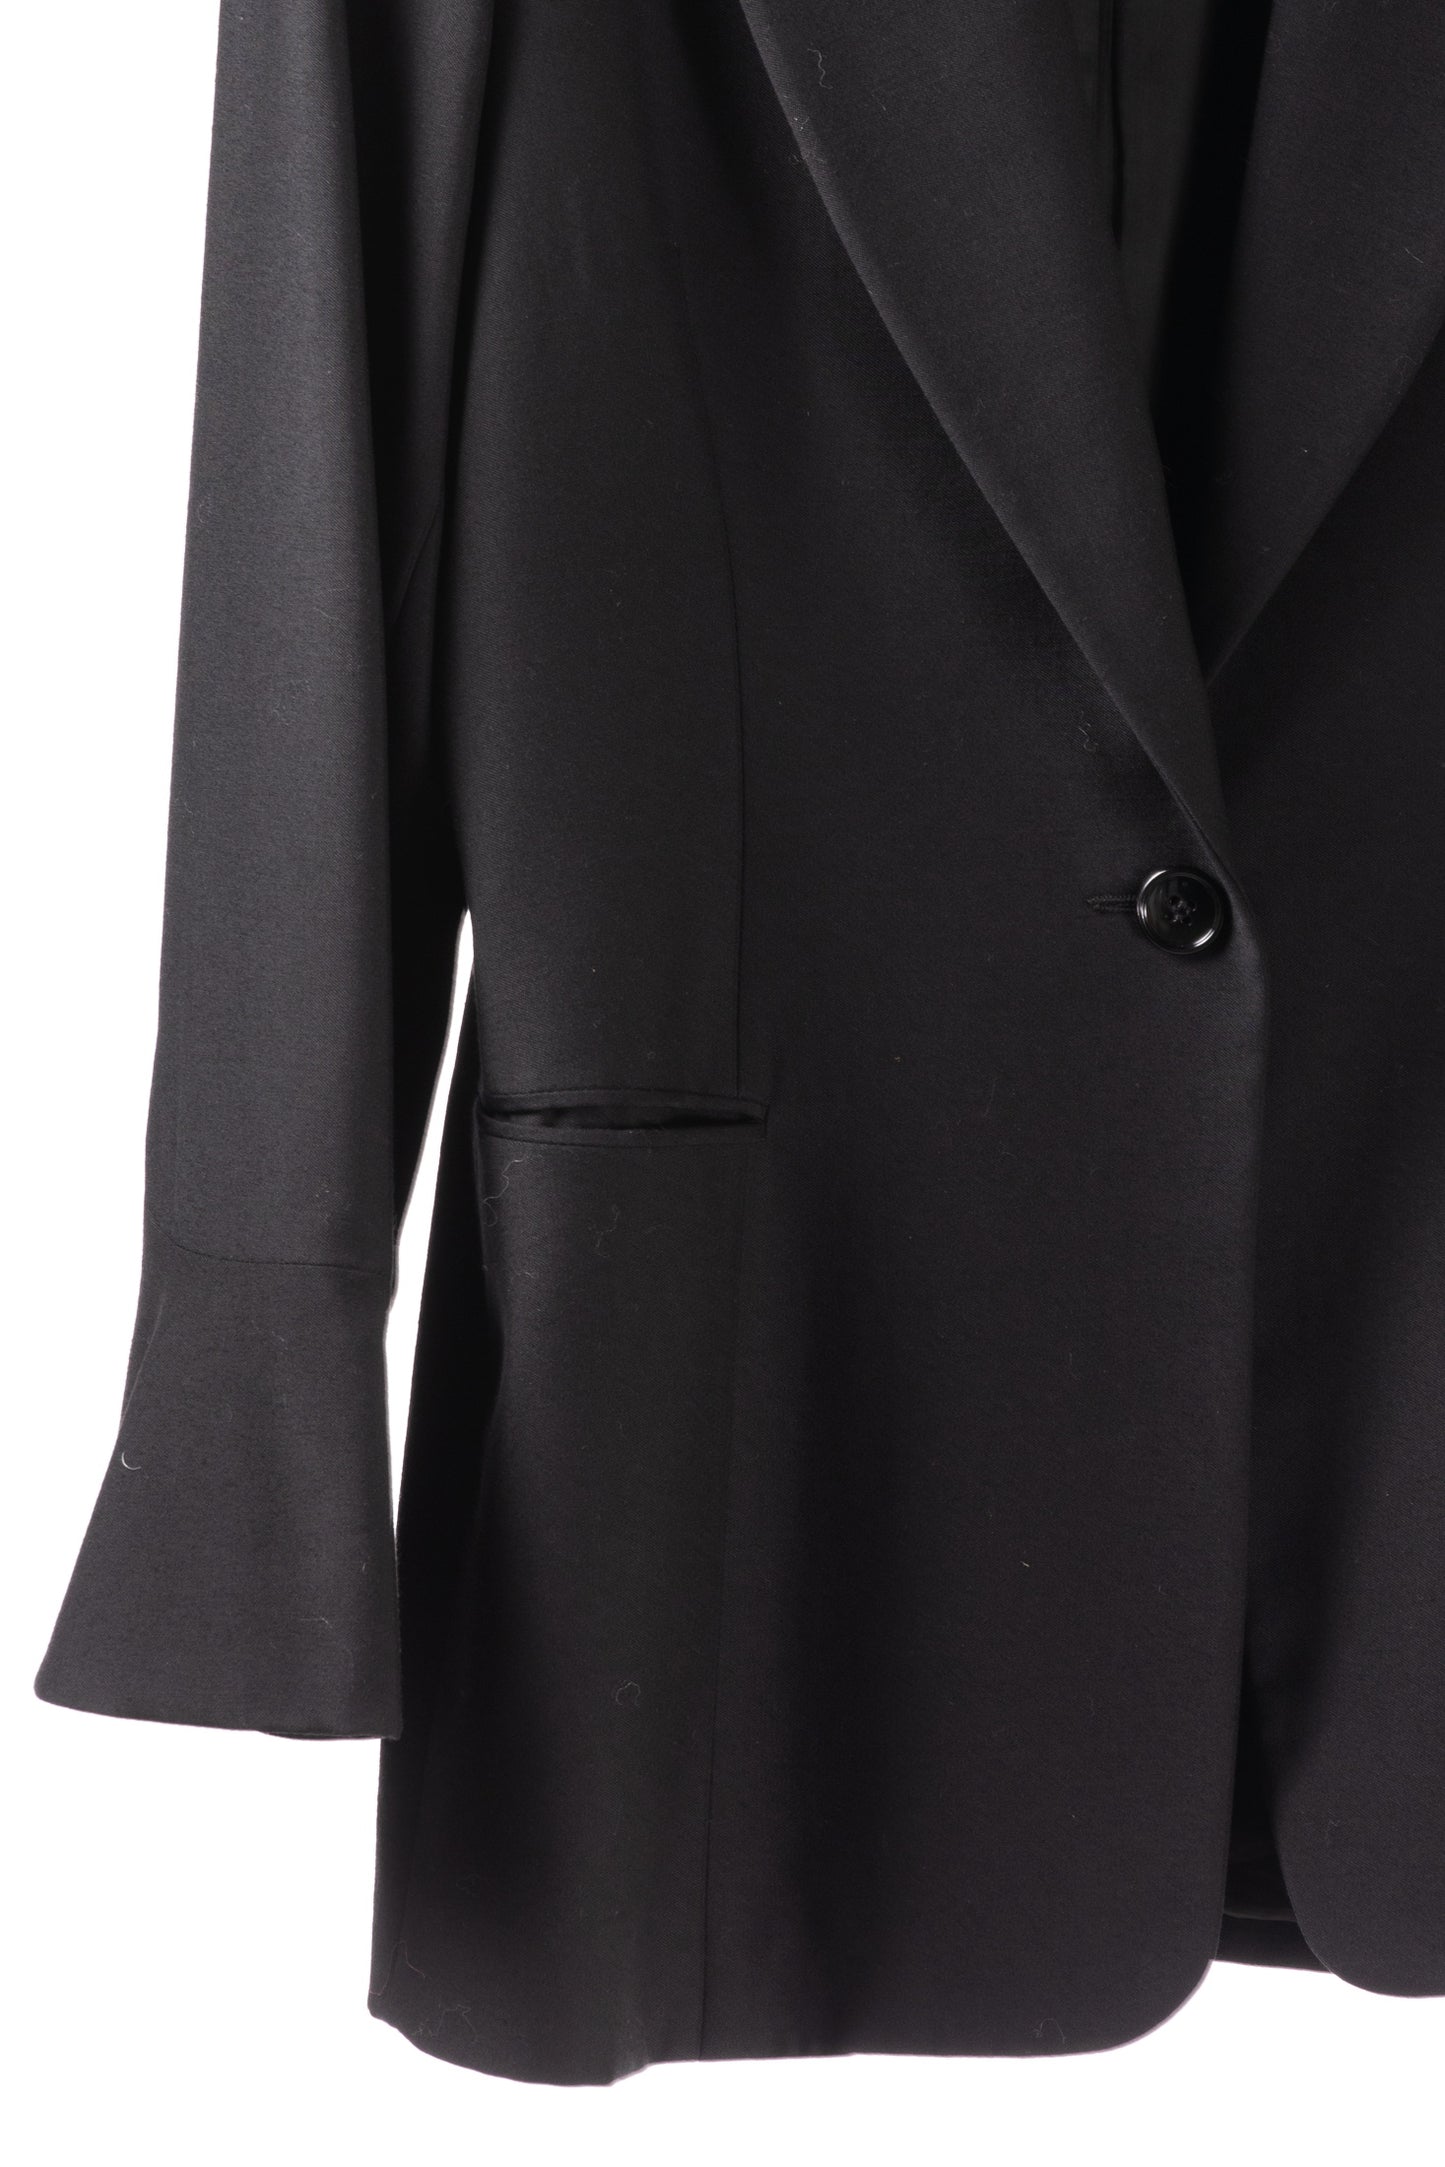 Gianfranco Ferré 90s blazer in black wool cloth